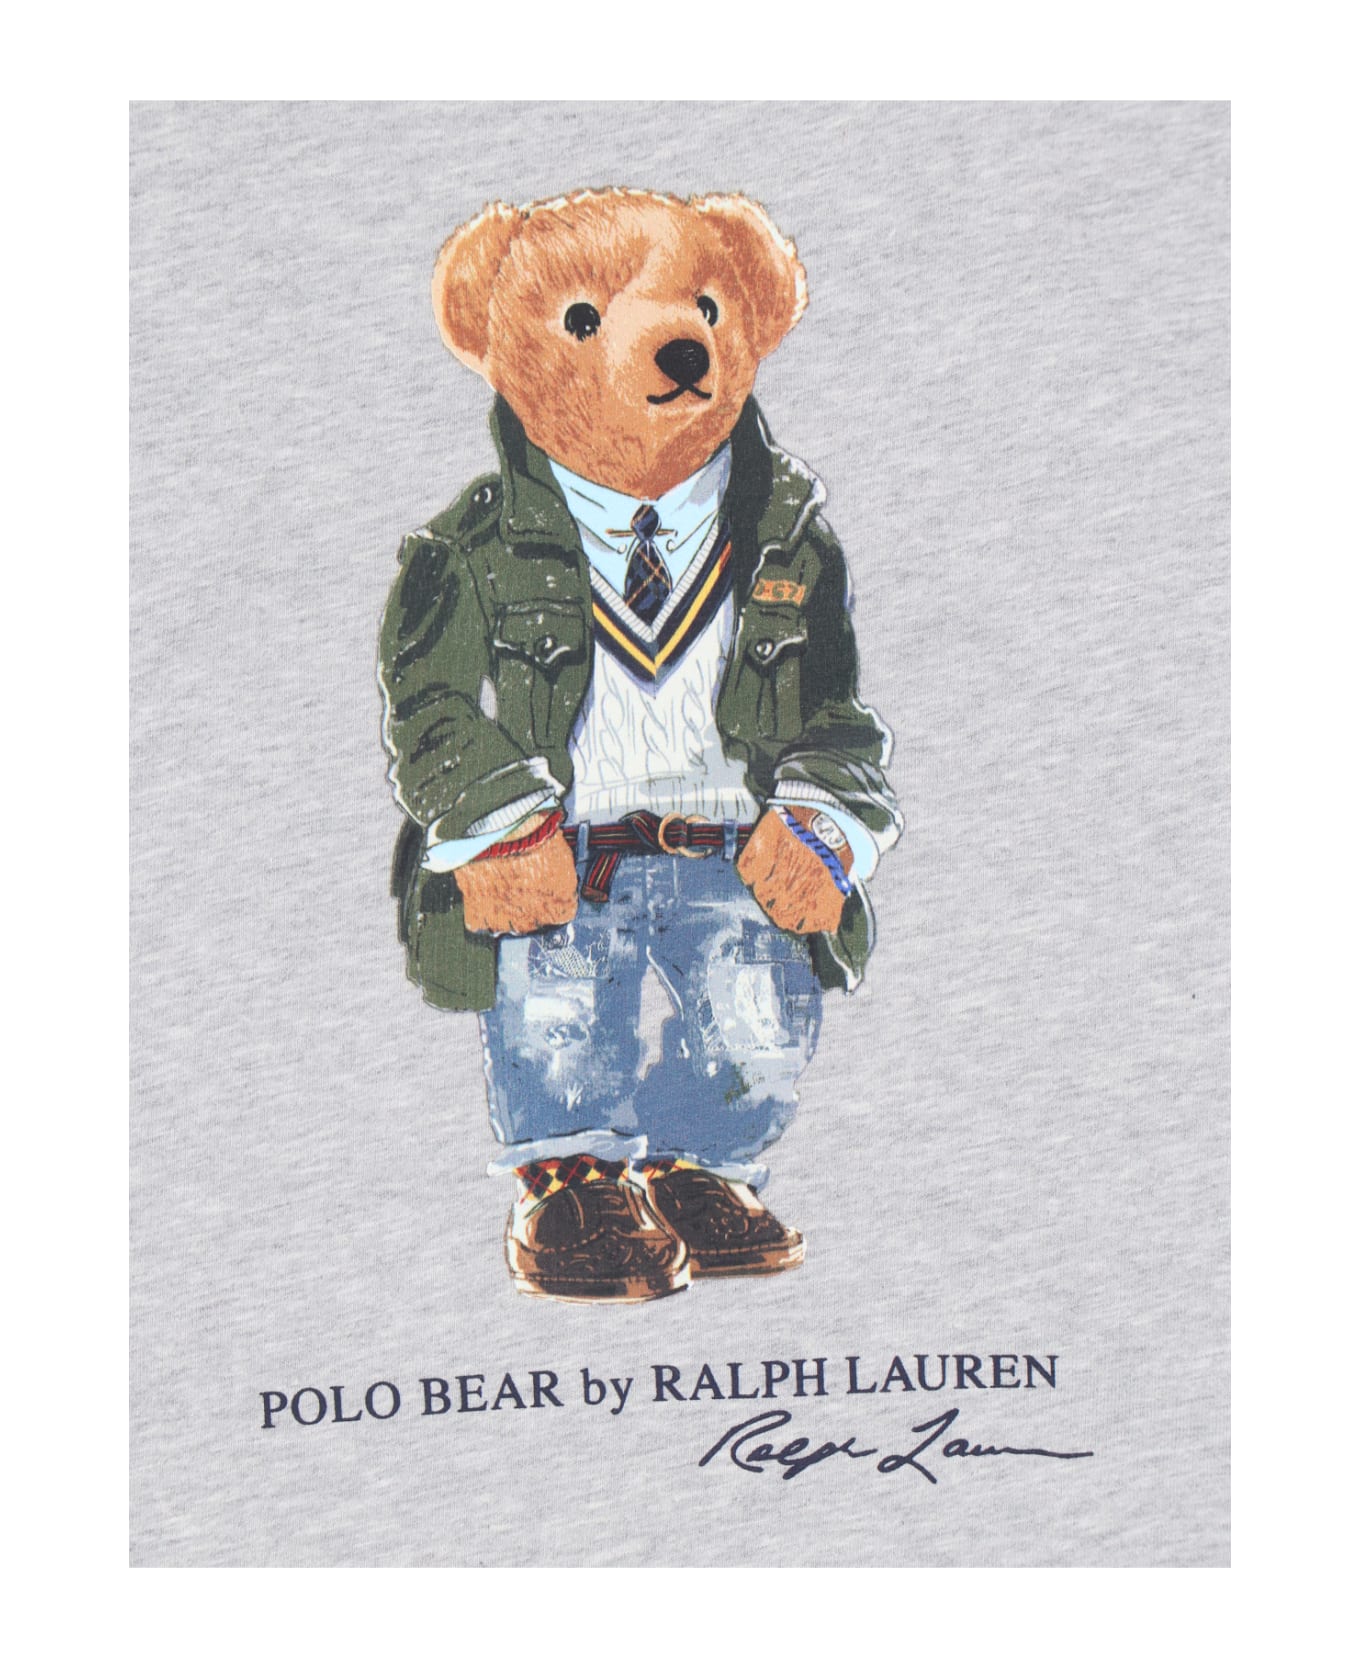 Polo Ralph Lauren 'polo Bear' T-shirt - GREY